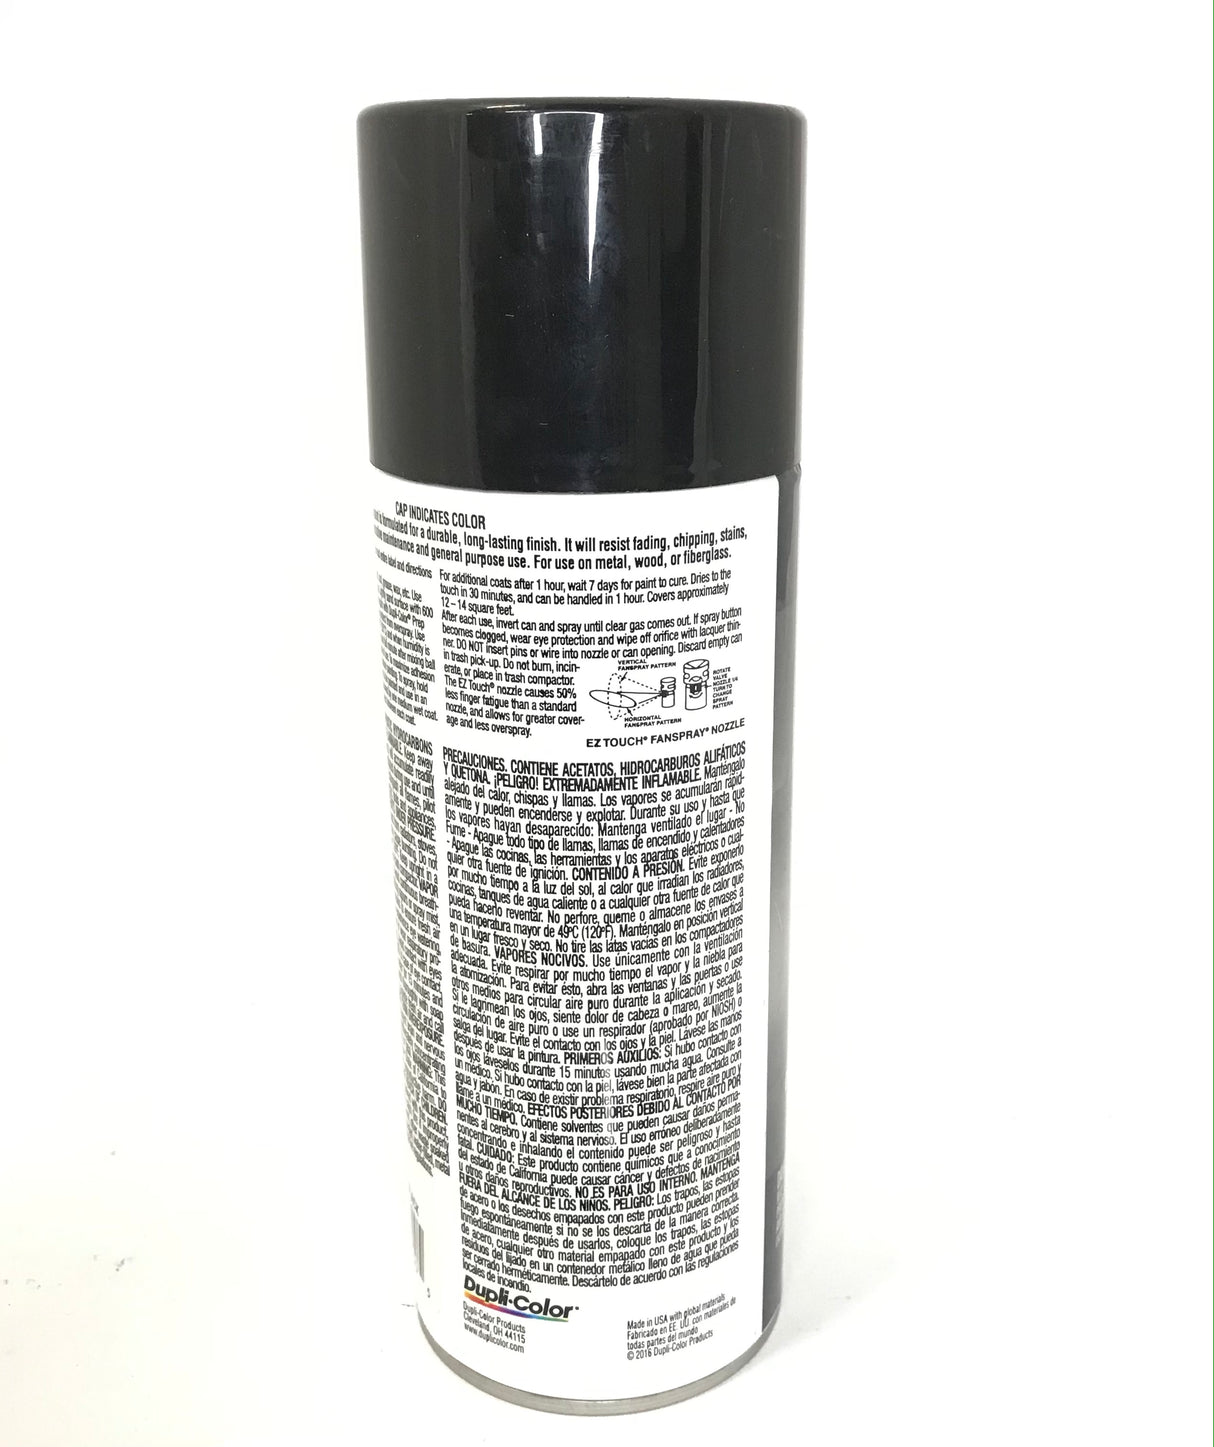 Dupli-Color DA1600 Gloss Black Acrylic Enamel Multi-Purpose Coating - 12 oz.